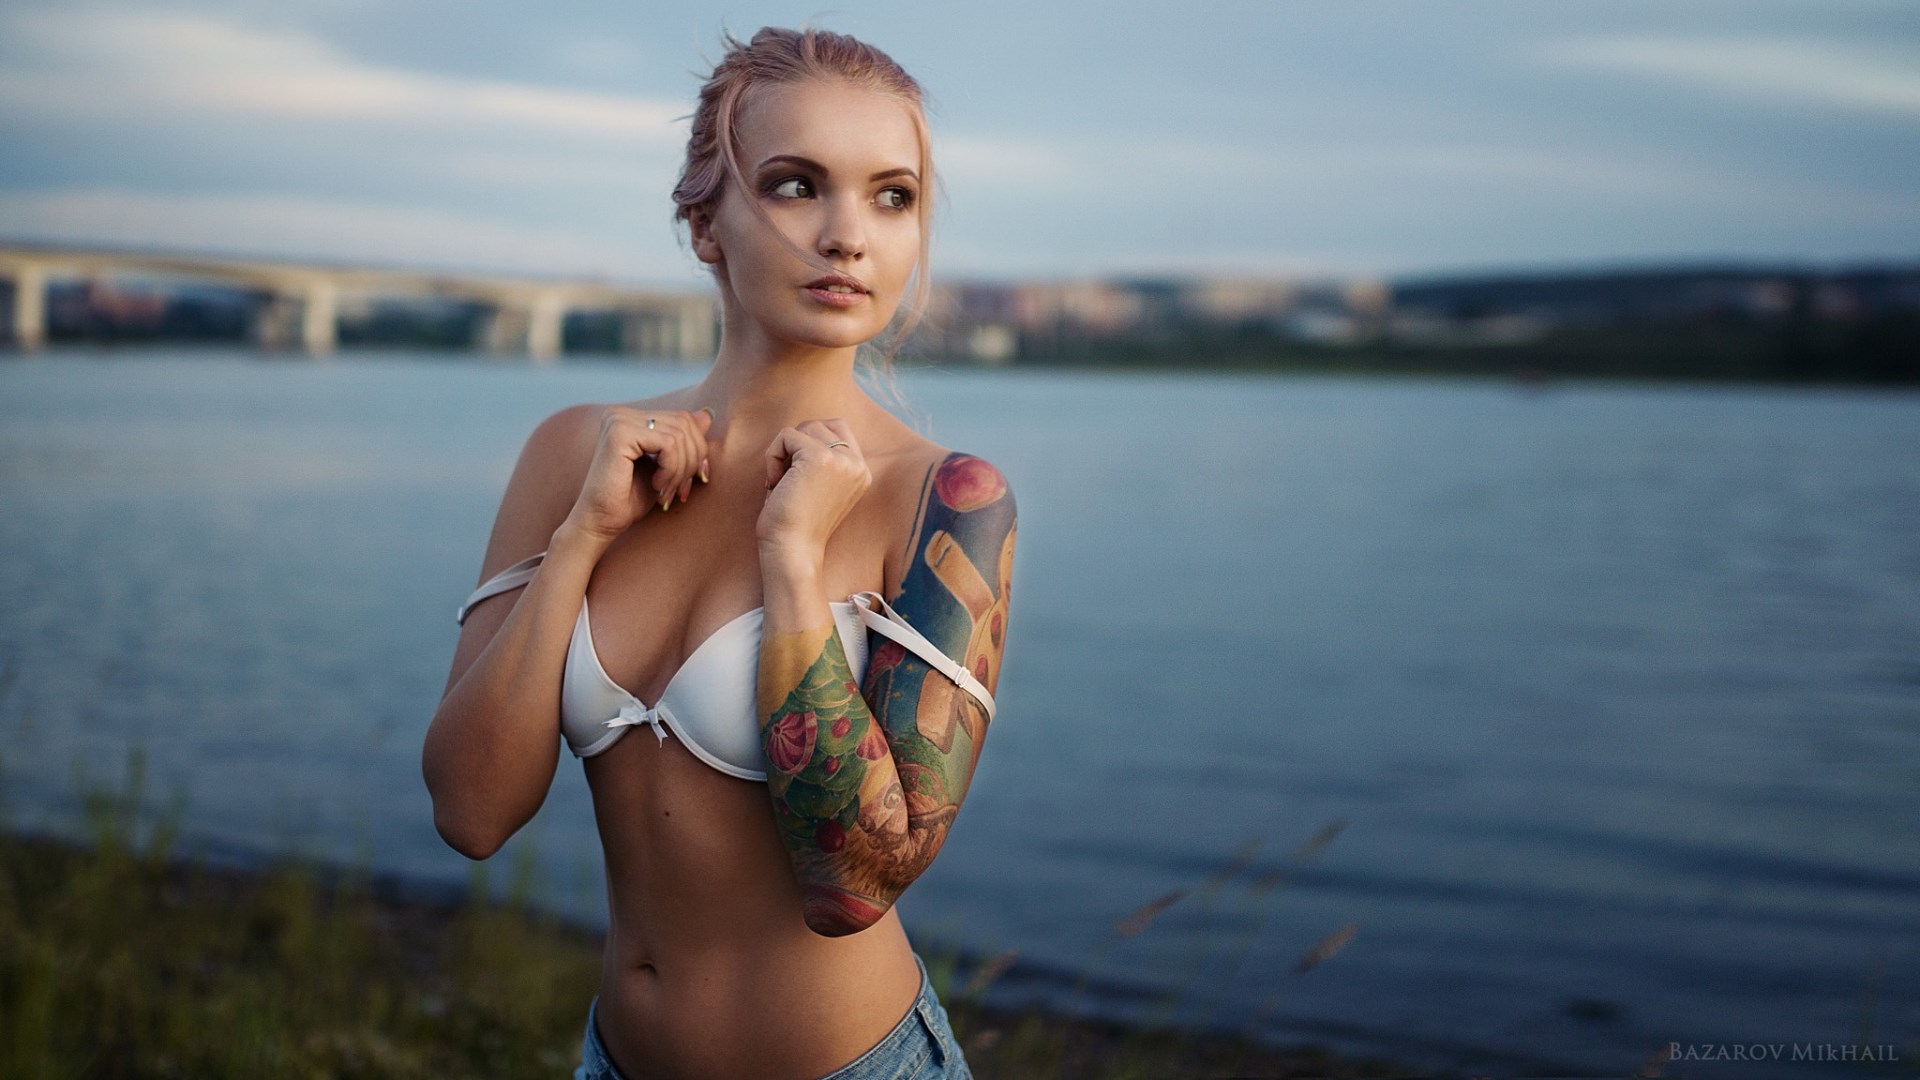 People 1920x1080 women outdoors 500px tattoo bra women Mikhail Bazarov white bra watermarked cropped